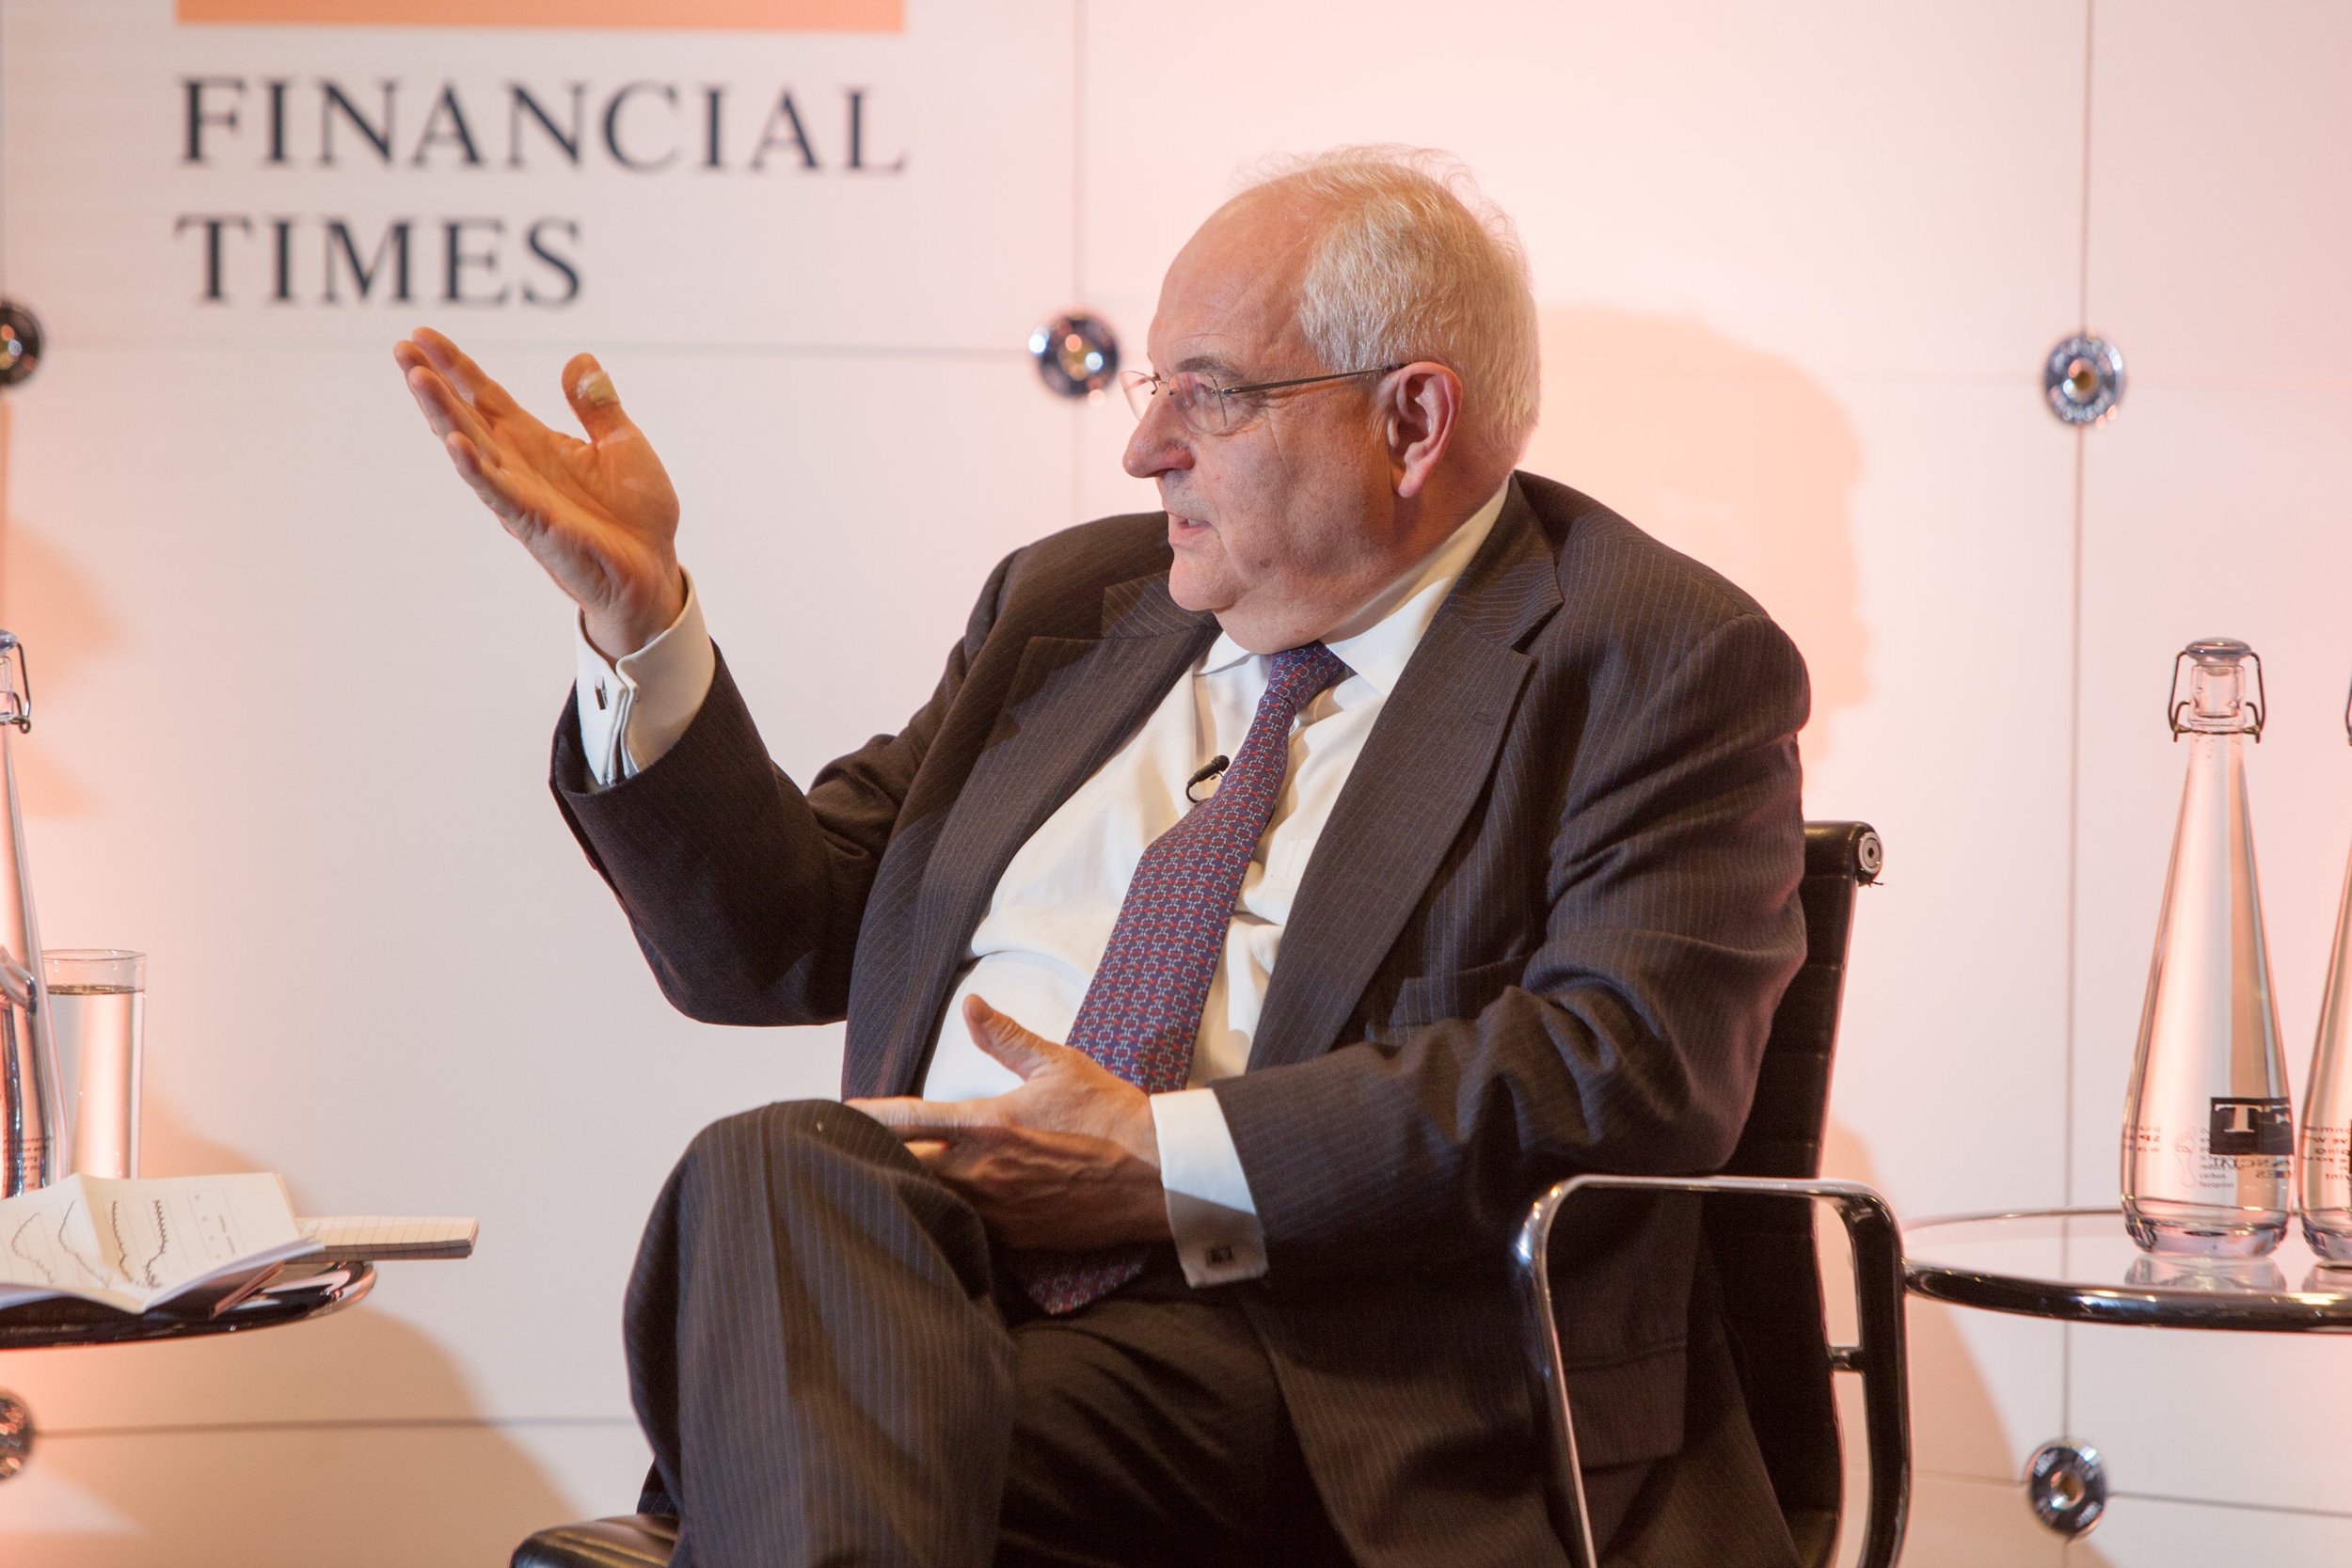 Martin Wolf CBE, Chief Economics Commentator, Financial Times